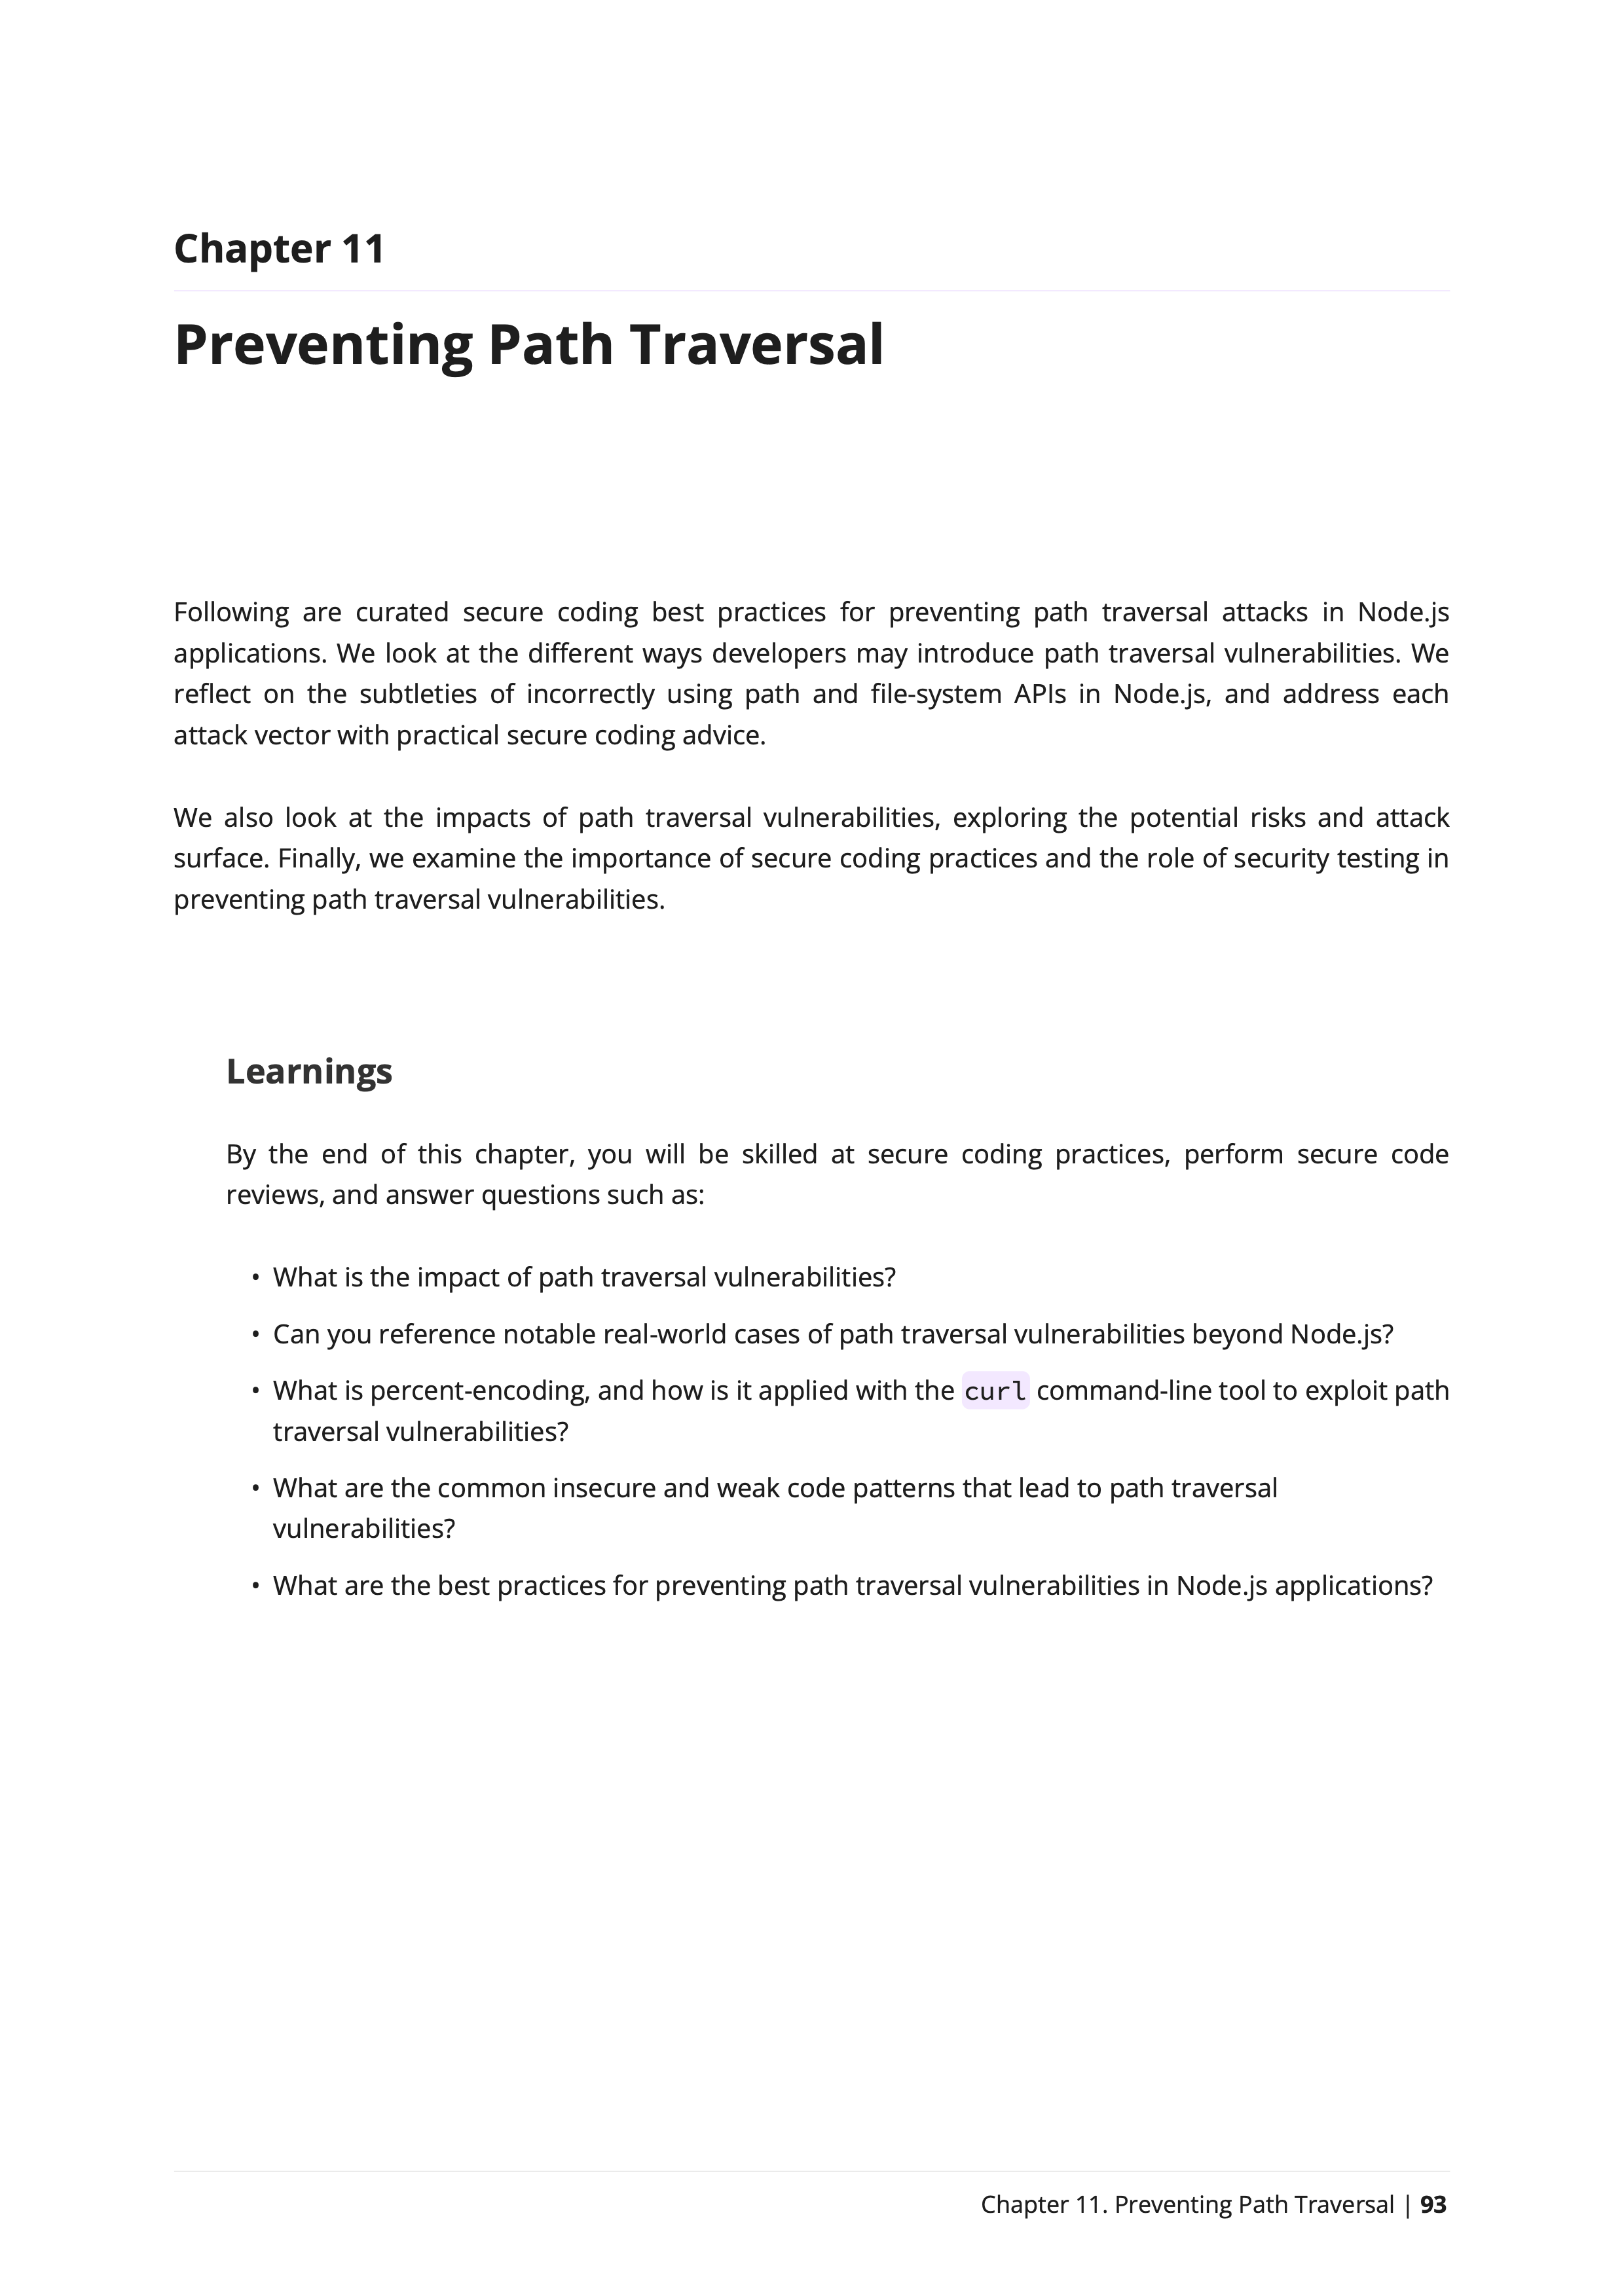 Preventing Path Traversal vulnerability in Node.js